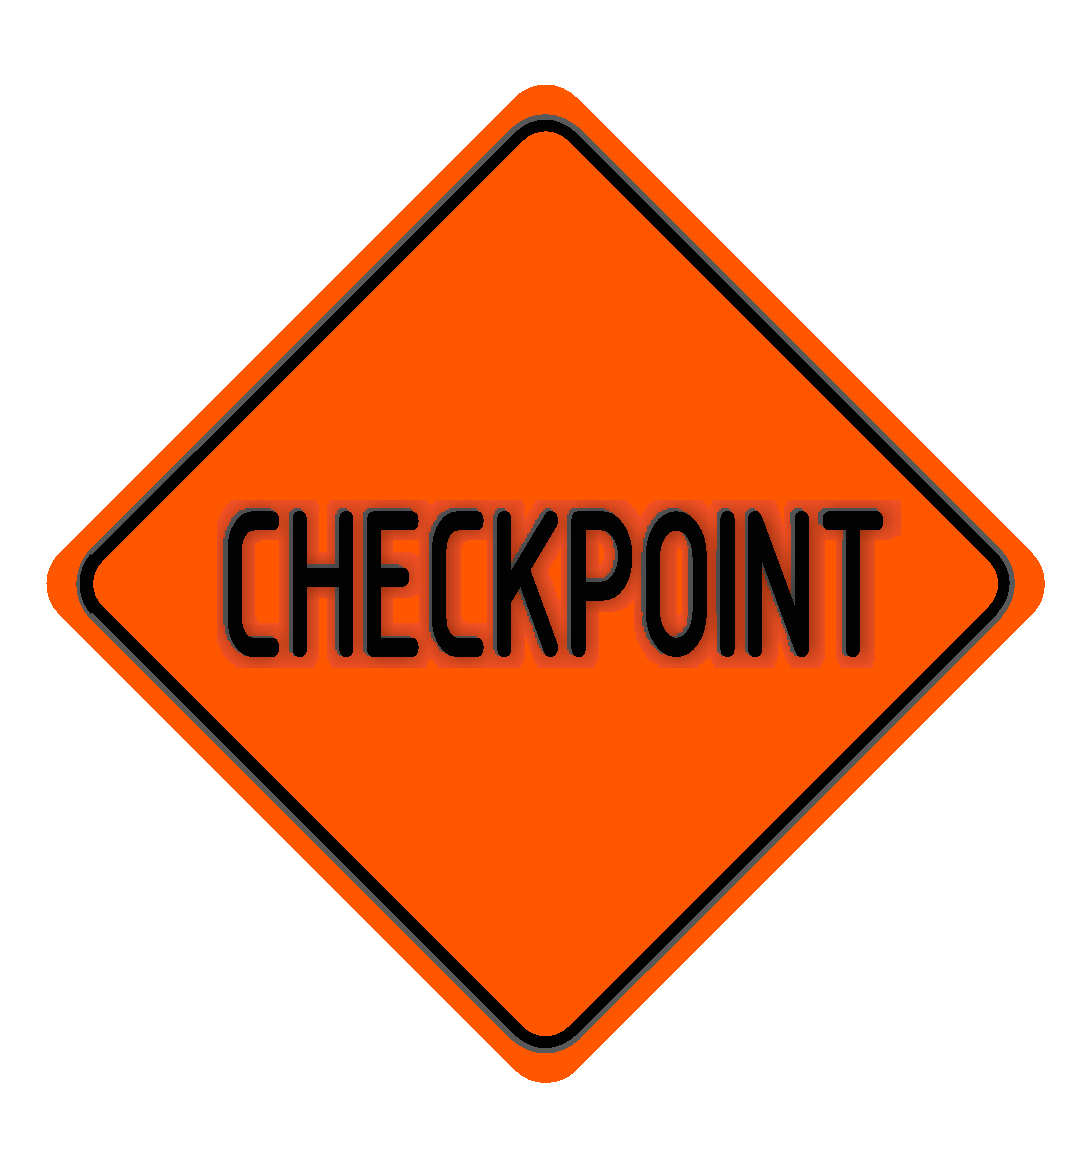 ЧЕКПОИНТ. Checkpoint изображение. ЧЕКПОИНТ логотип. ЧЕКПОИНТ В игре.